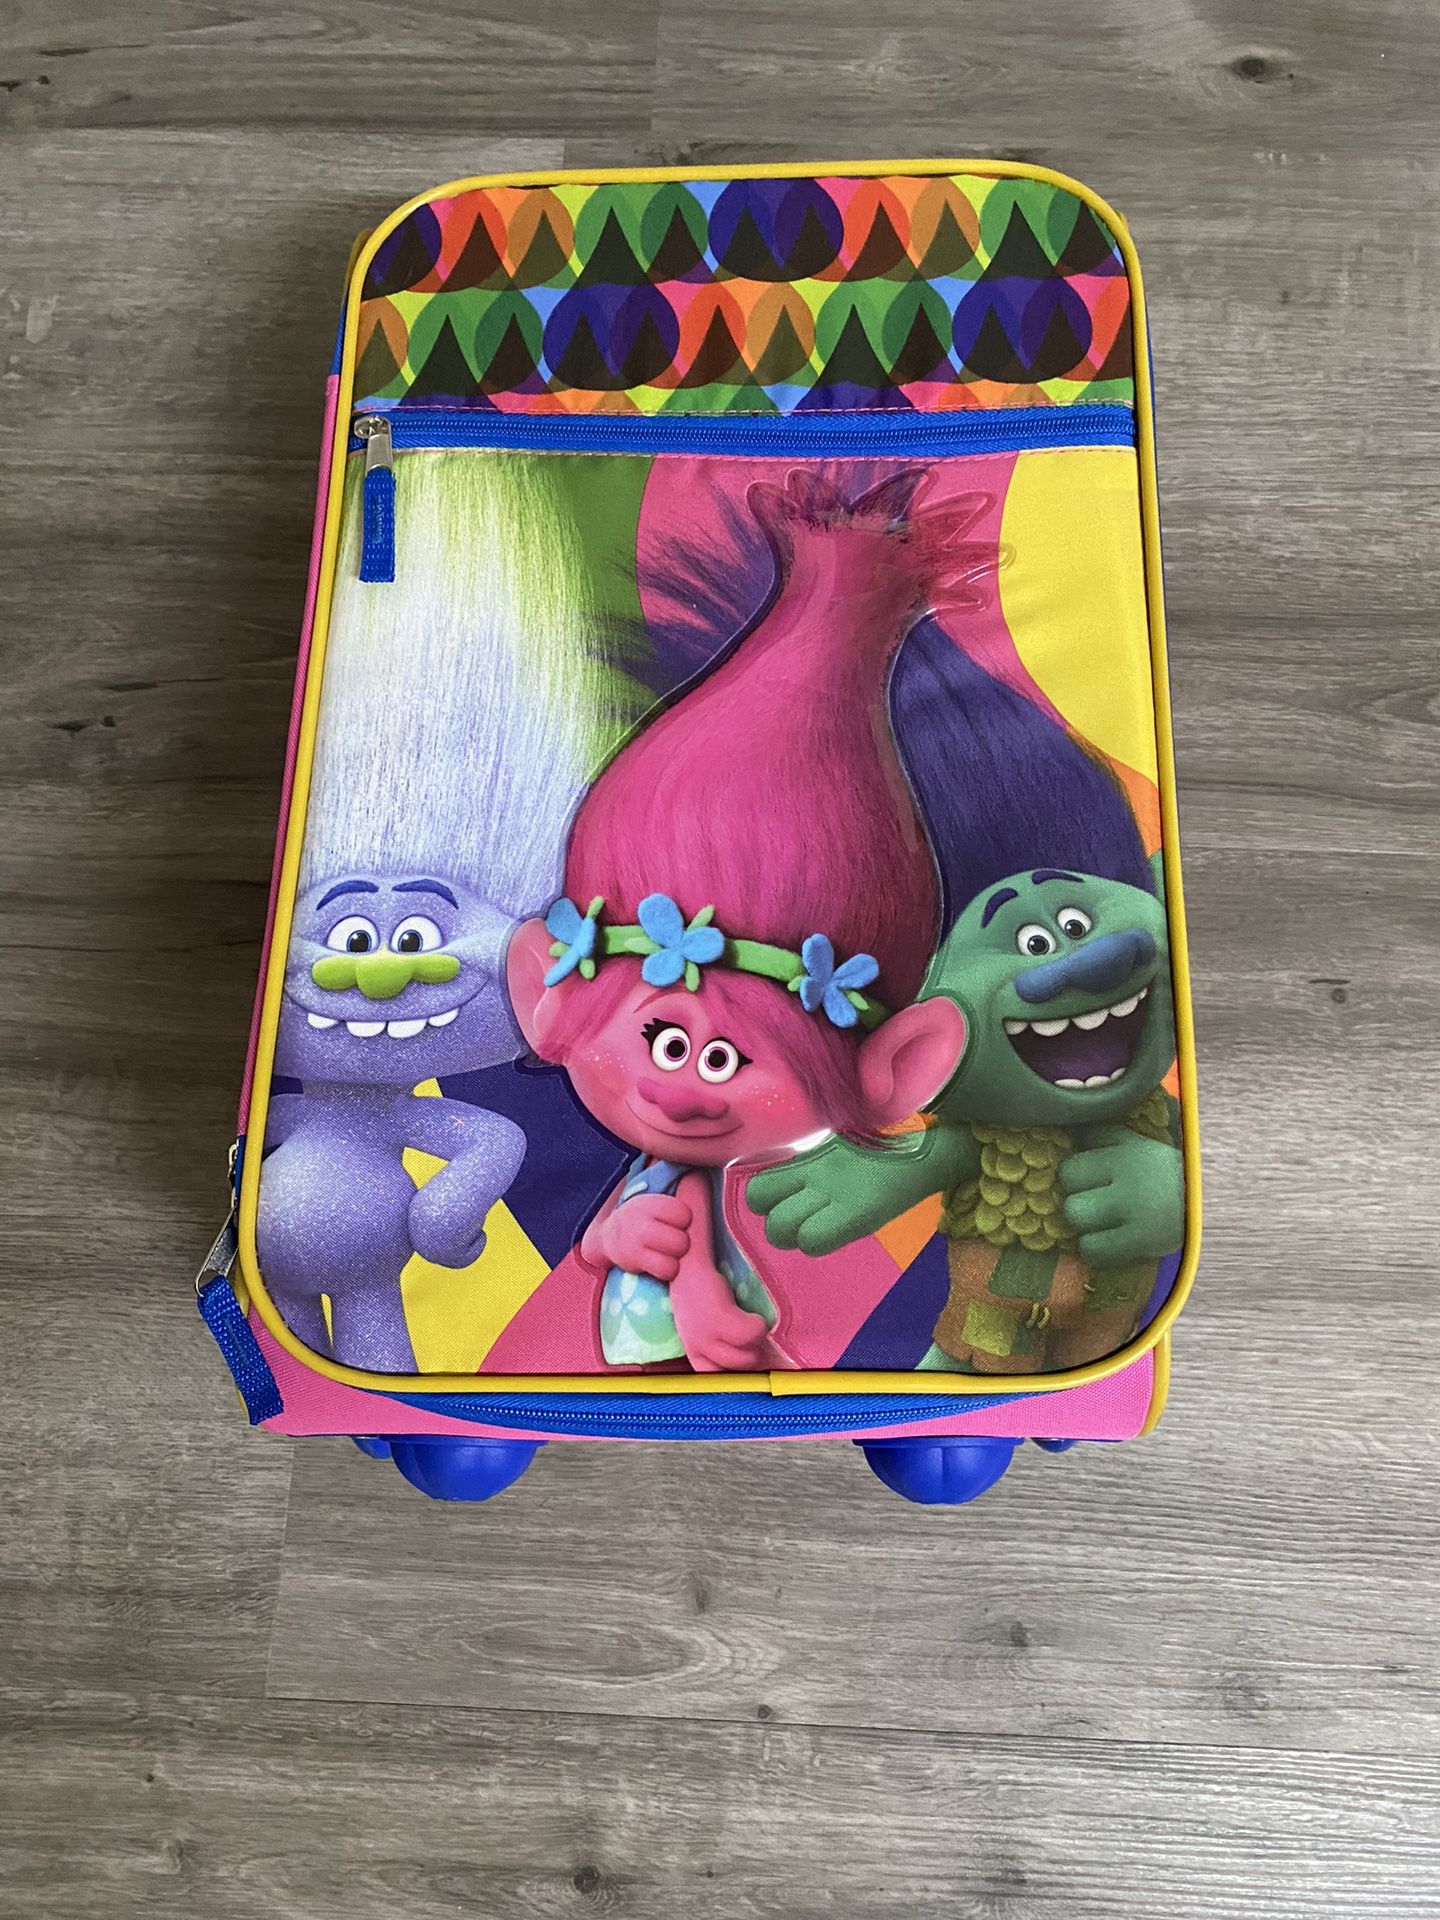 Brand NEW Trolls Suitcase 